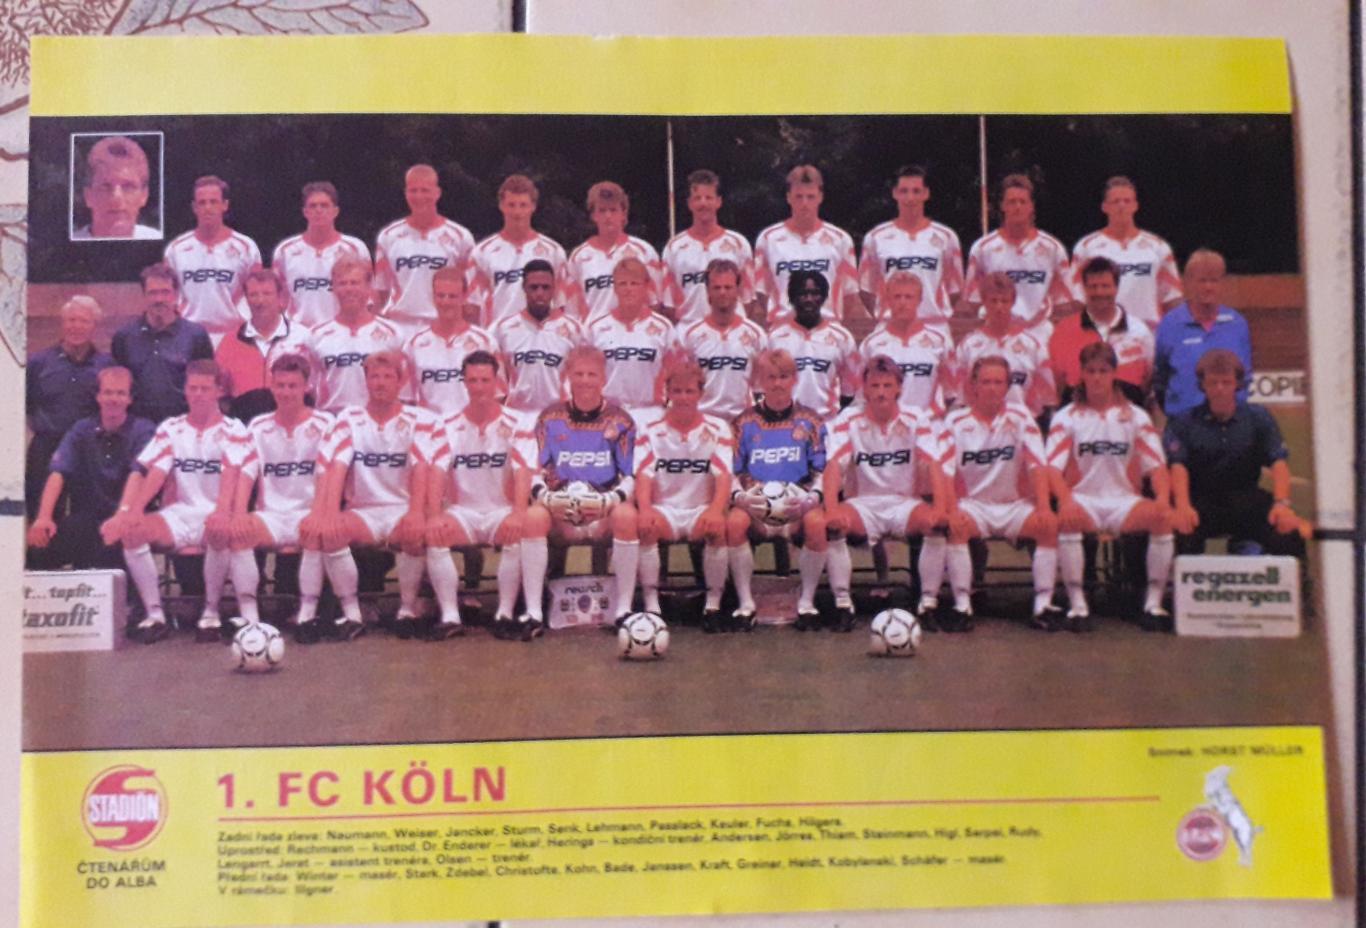 1. FC Koln.Плакат формата А4 из журнала Stadion.